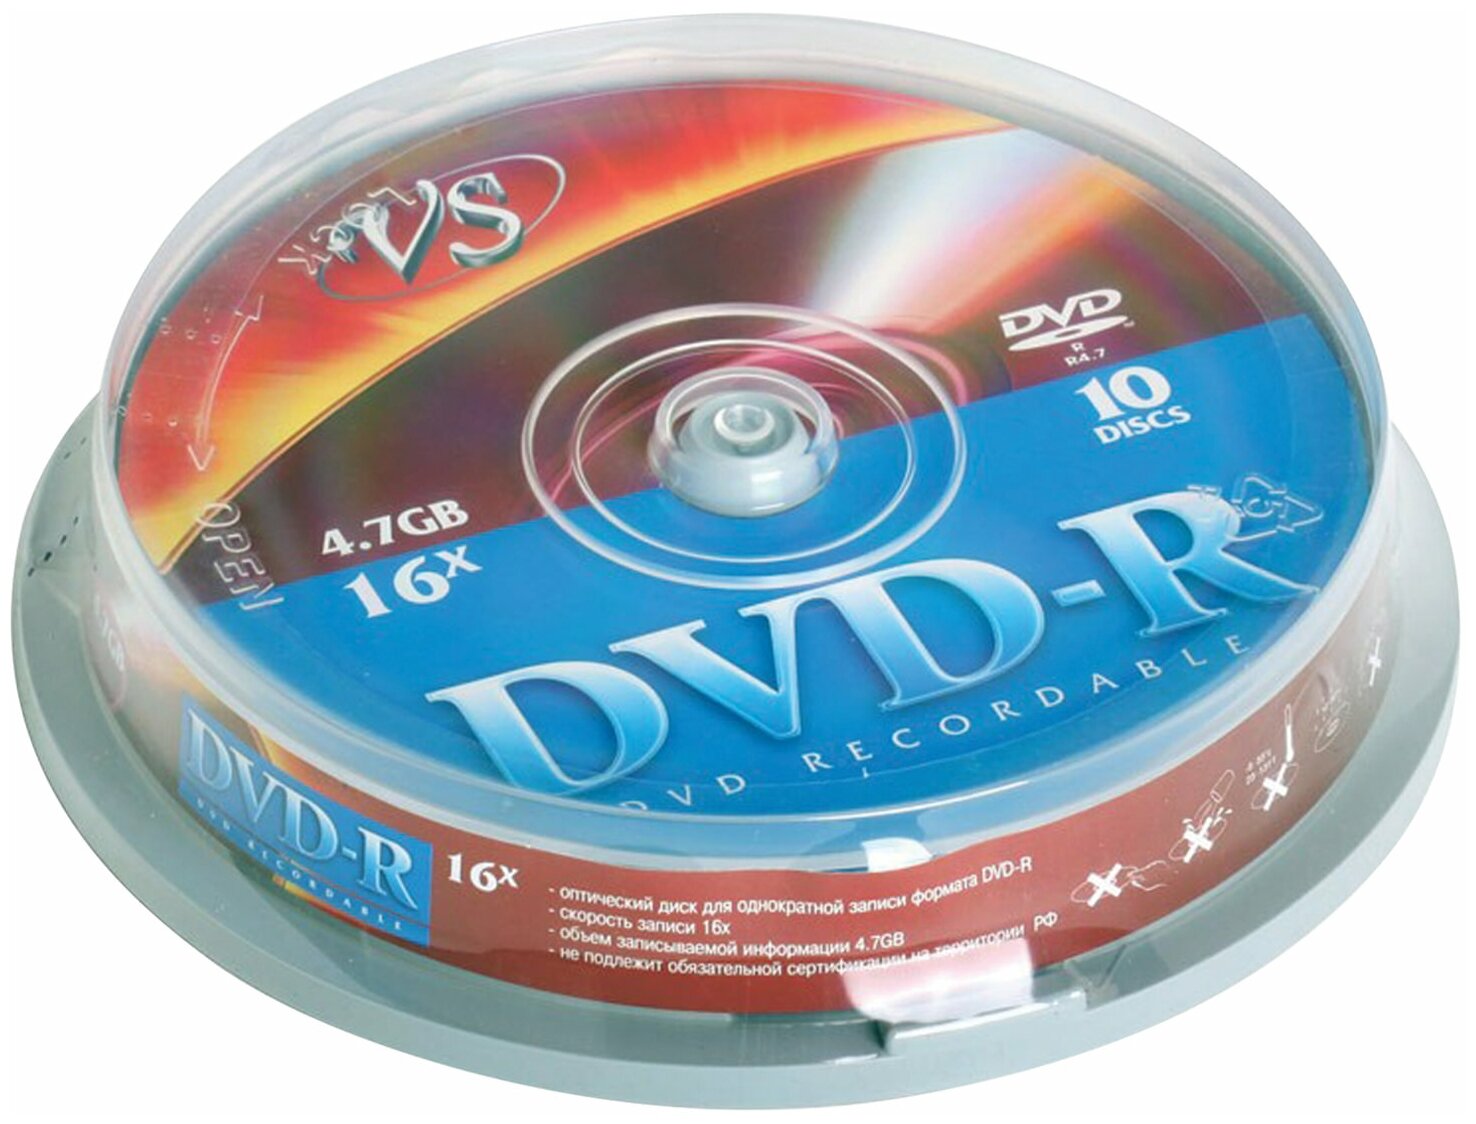 Диски DVD-R VS 4,7 Gb, комплект 10 шт, Cake Box, VSDVDRCB1001 - 1 шт.